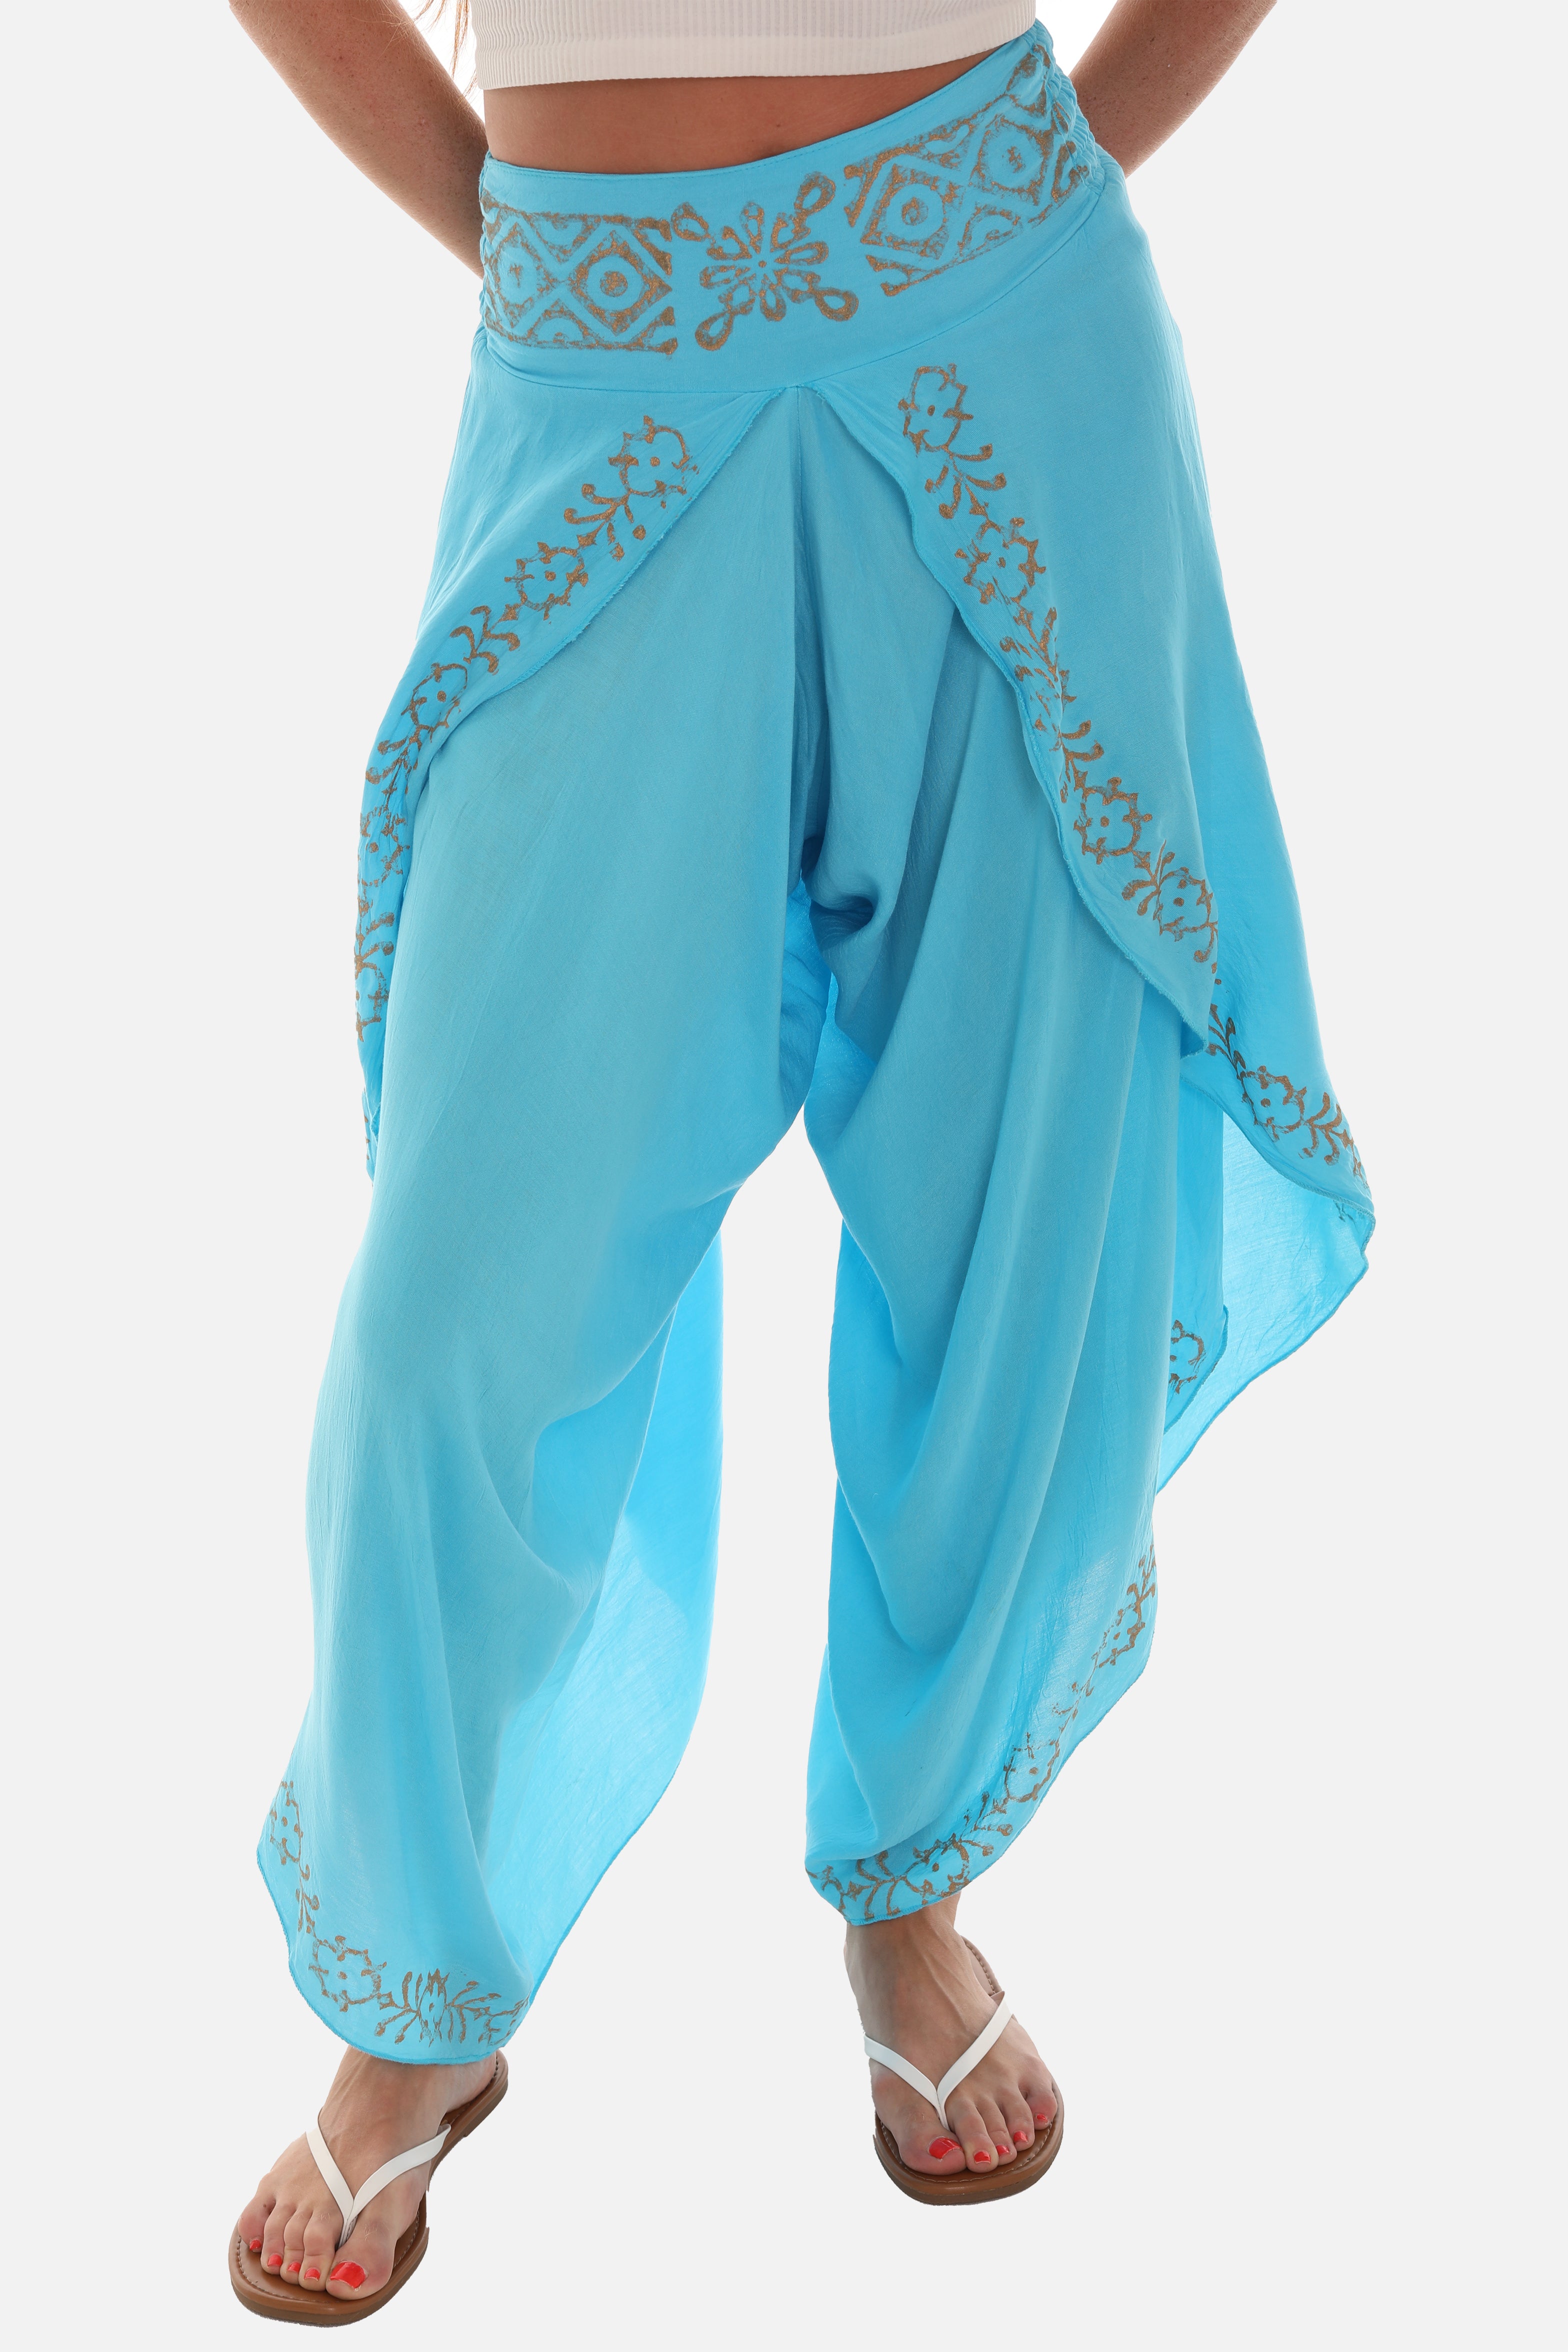 Women's Front Split Open Harem Pants - Redefining Style and Comfort -  Shoreline Wear, Inc.